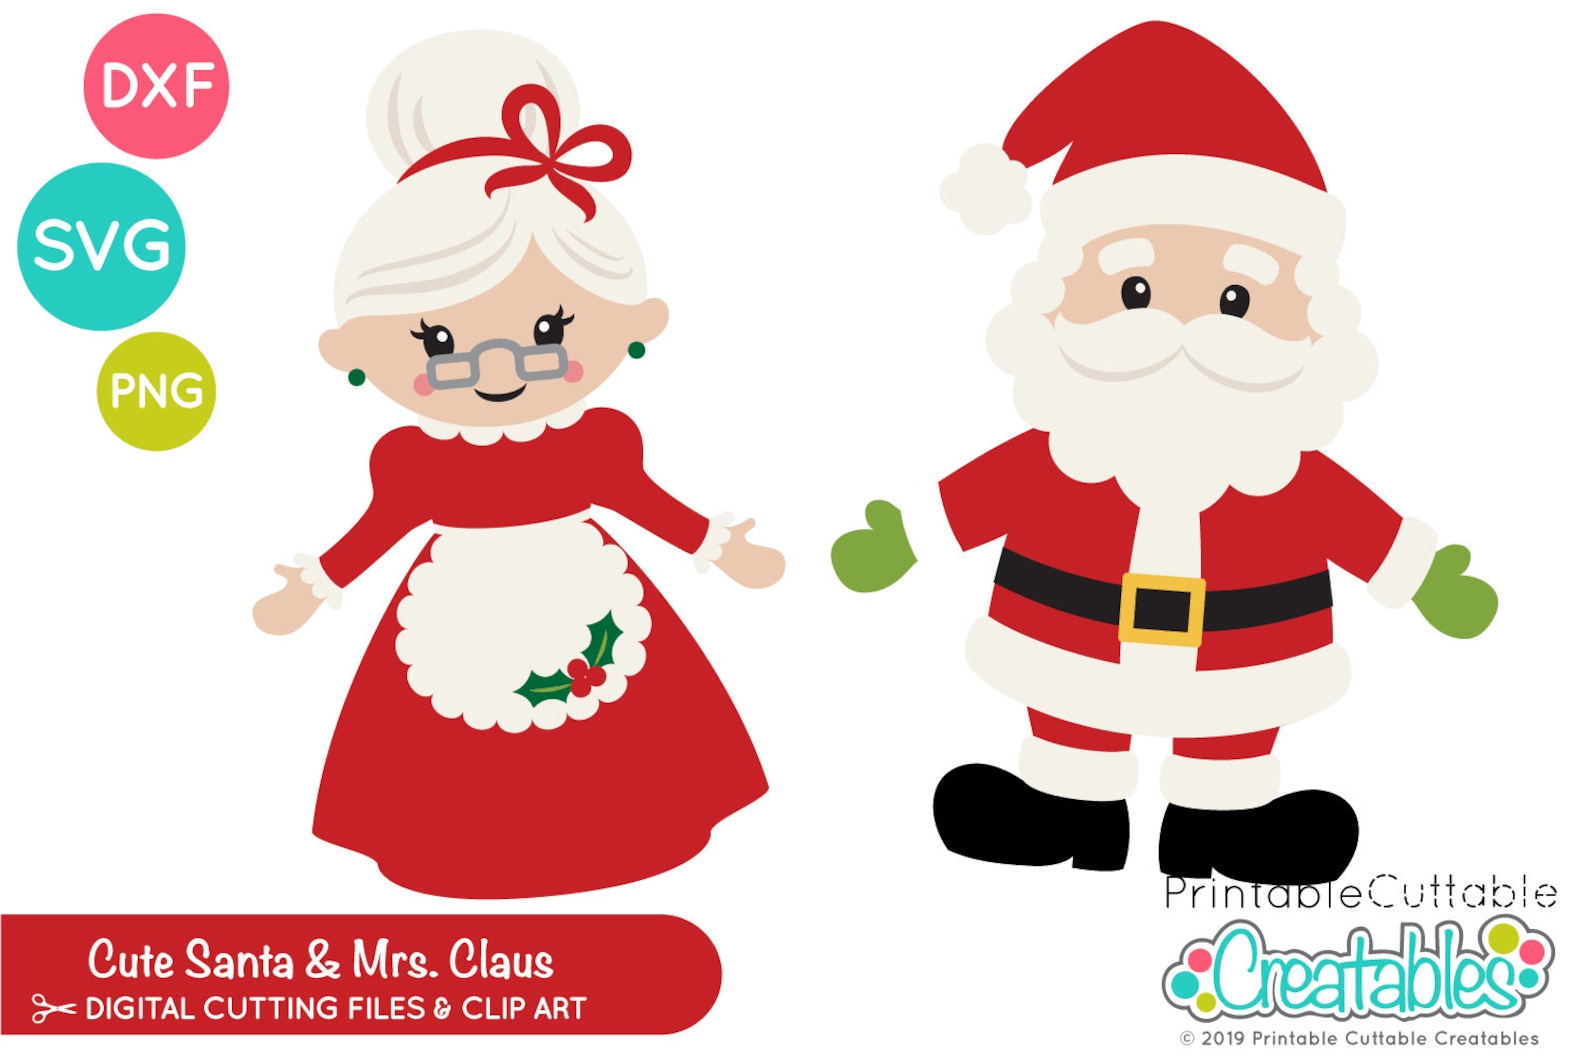 Cute Santa & Mrs. Claus SVG Cut Files / Clipart E505 svg image 1.